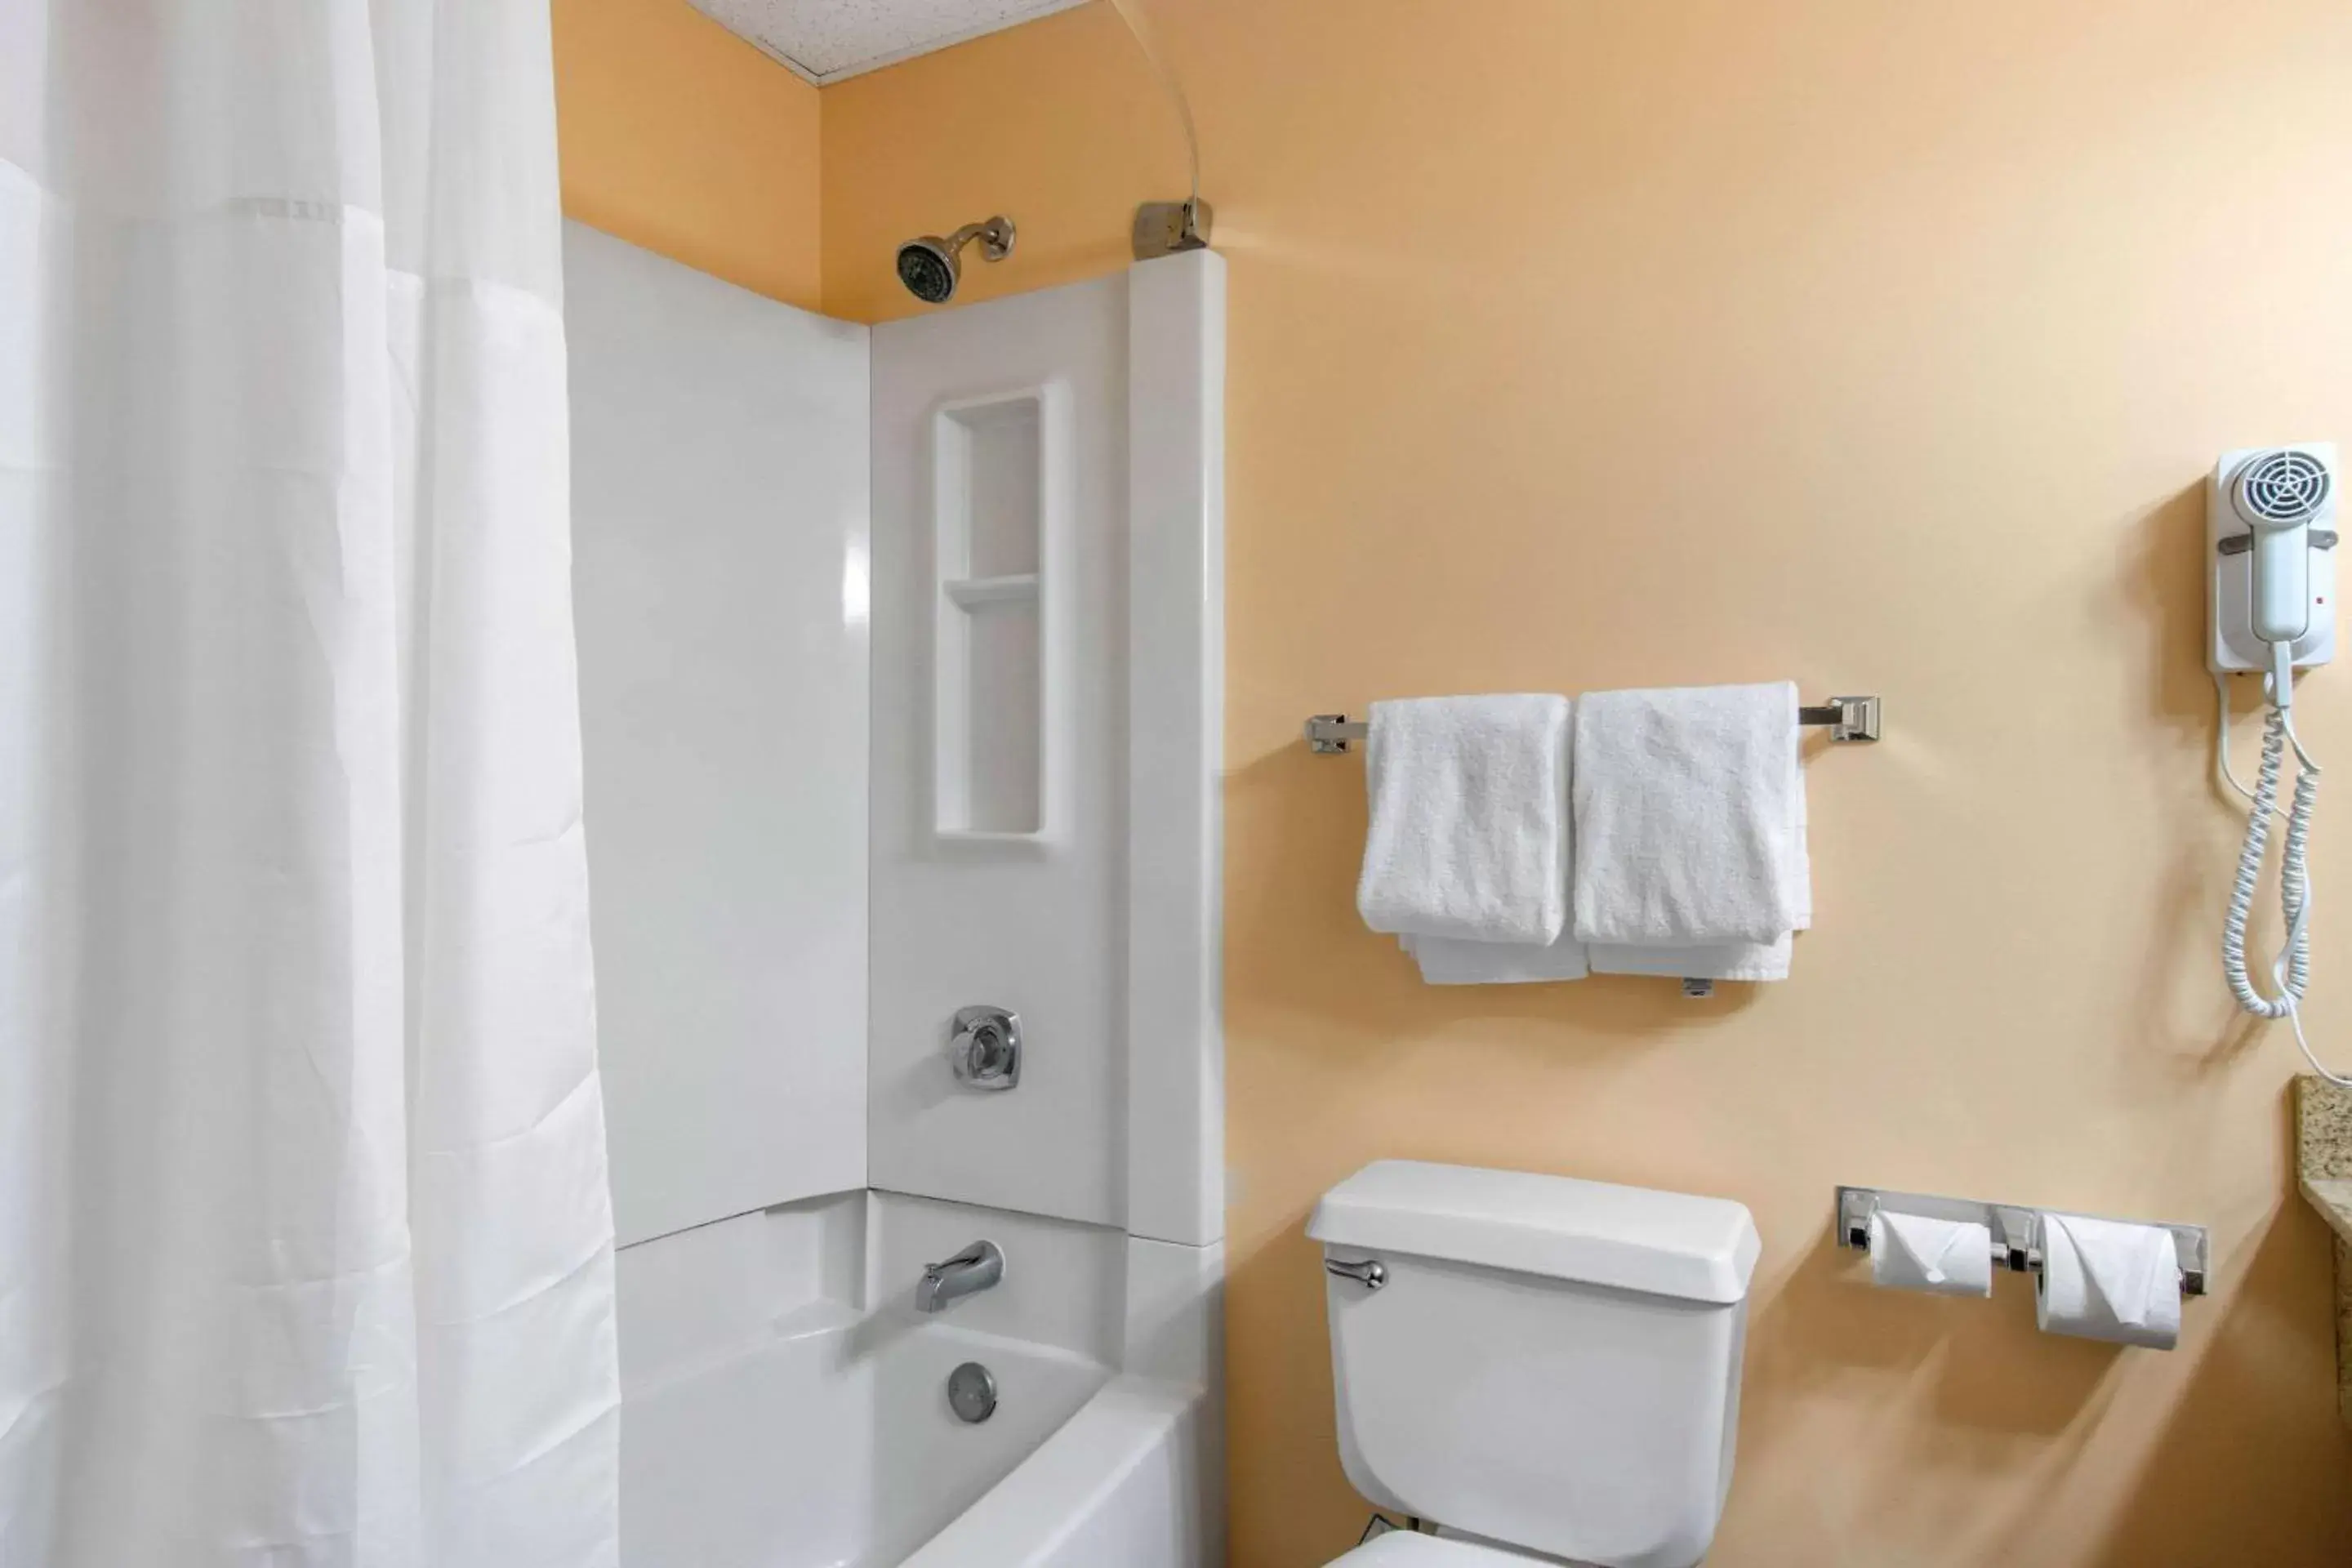 Photo of the whole room, Bathroom in Quality Inn Carlisle PA